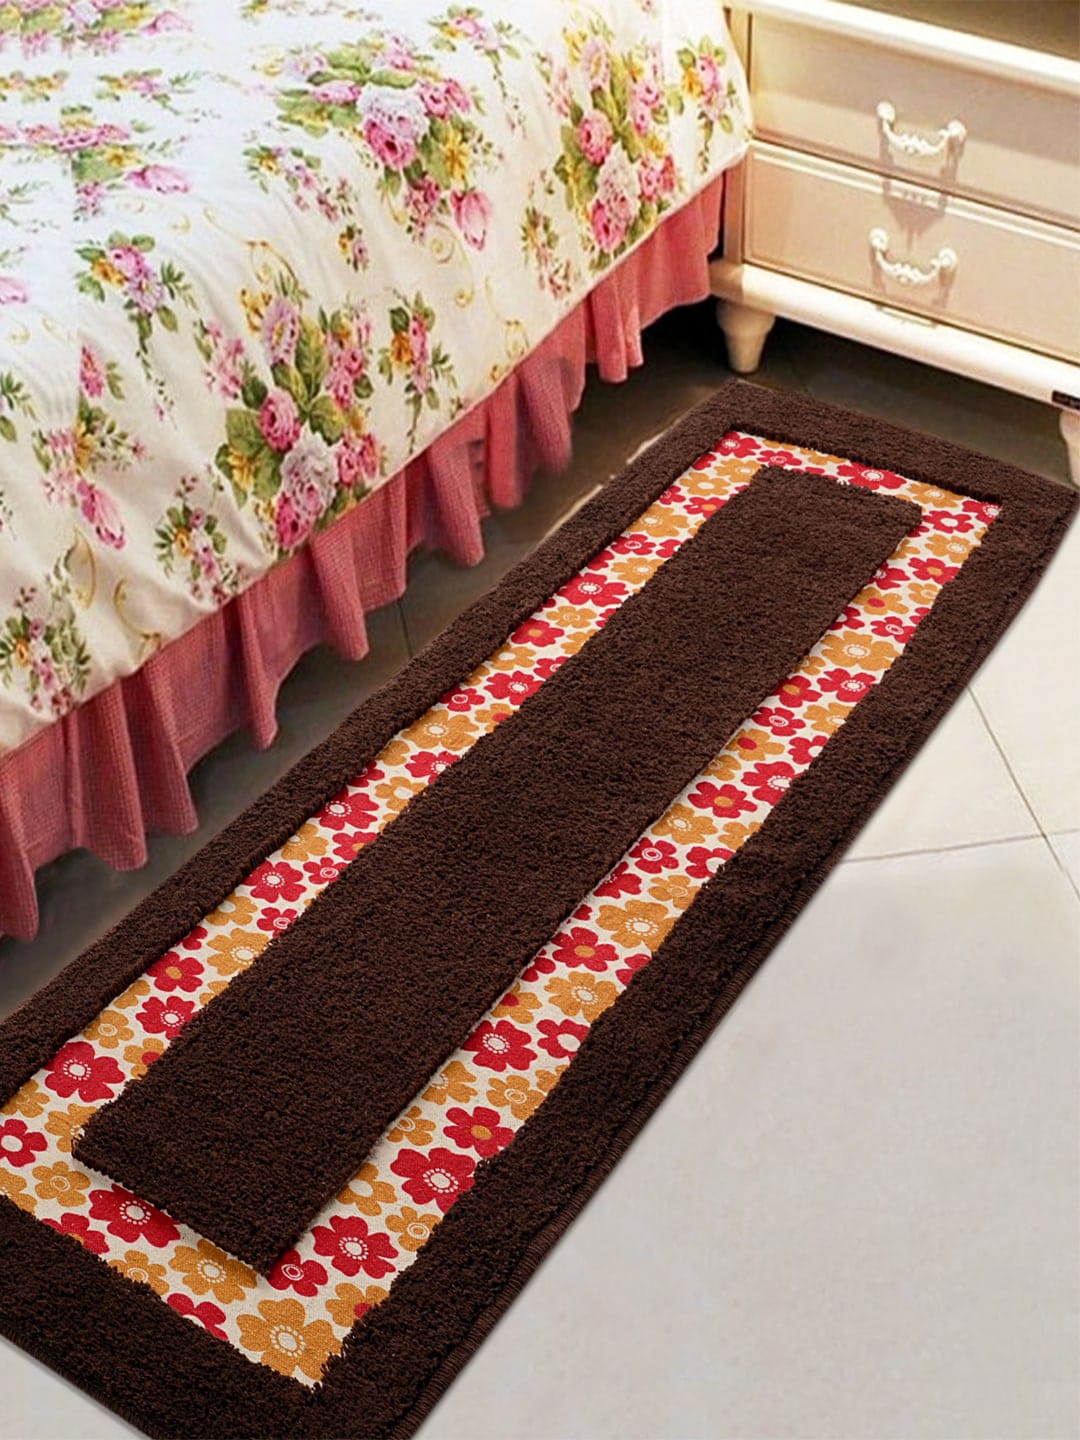 Saral Home Brown & Red Floral Anti-Skid Floor Runner Price in India